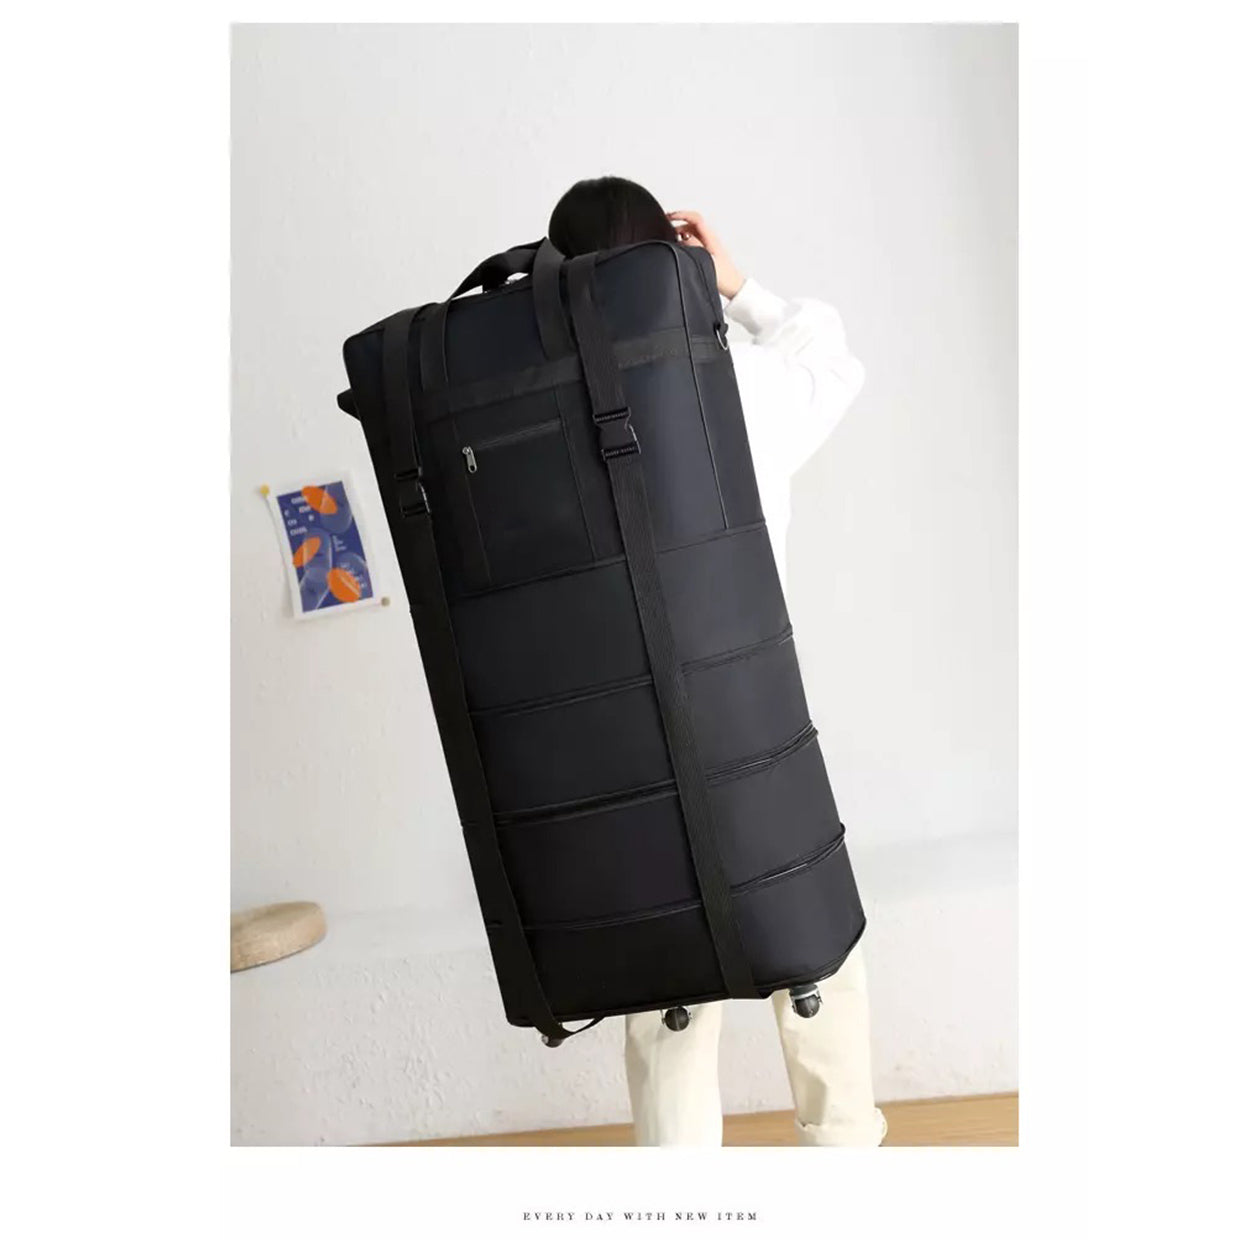 Foldable 5 Wheel Storage Bag | Wheeled Duffel Travel Bag